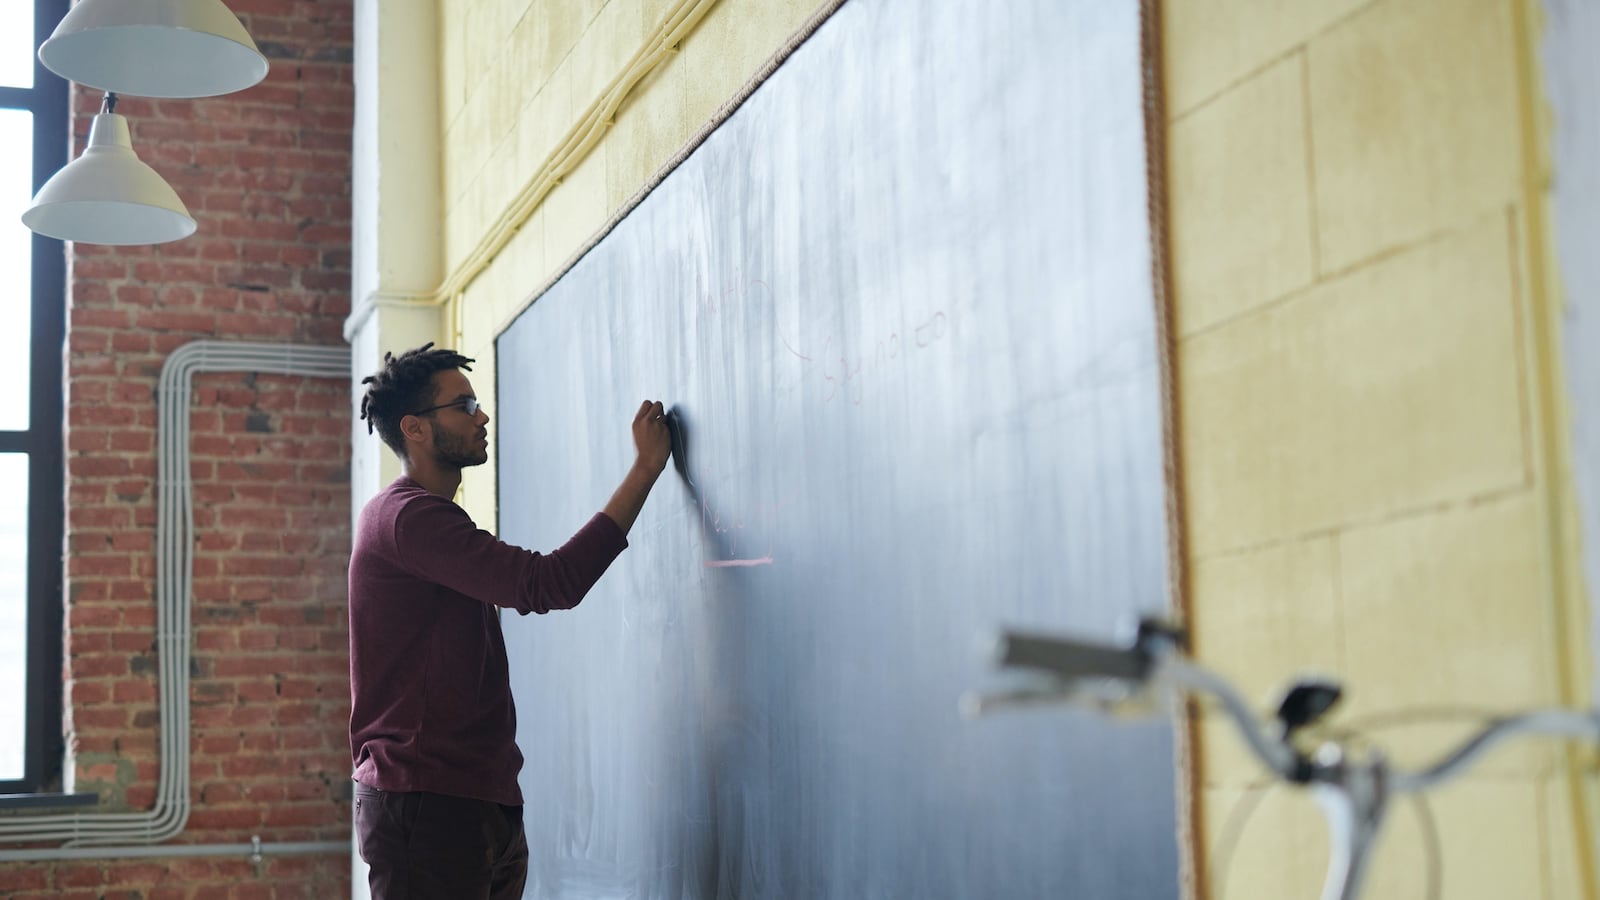 A teacher writes on a blackboard